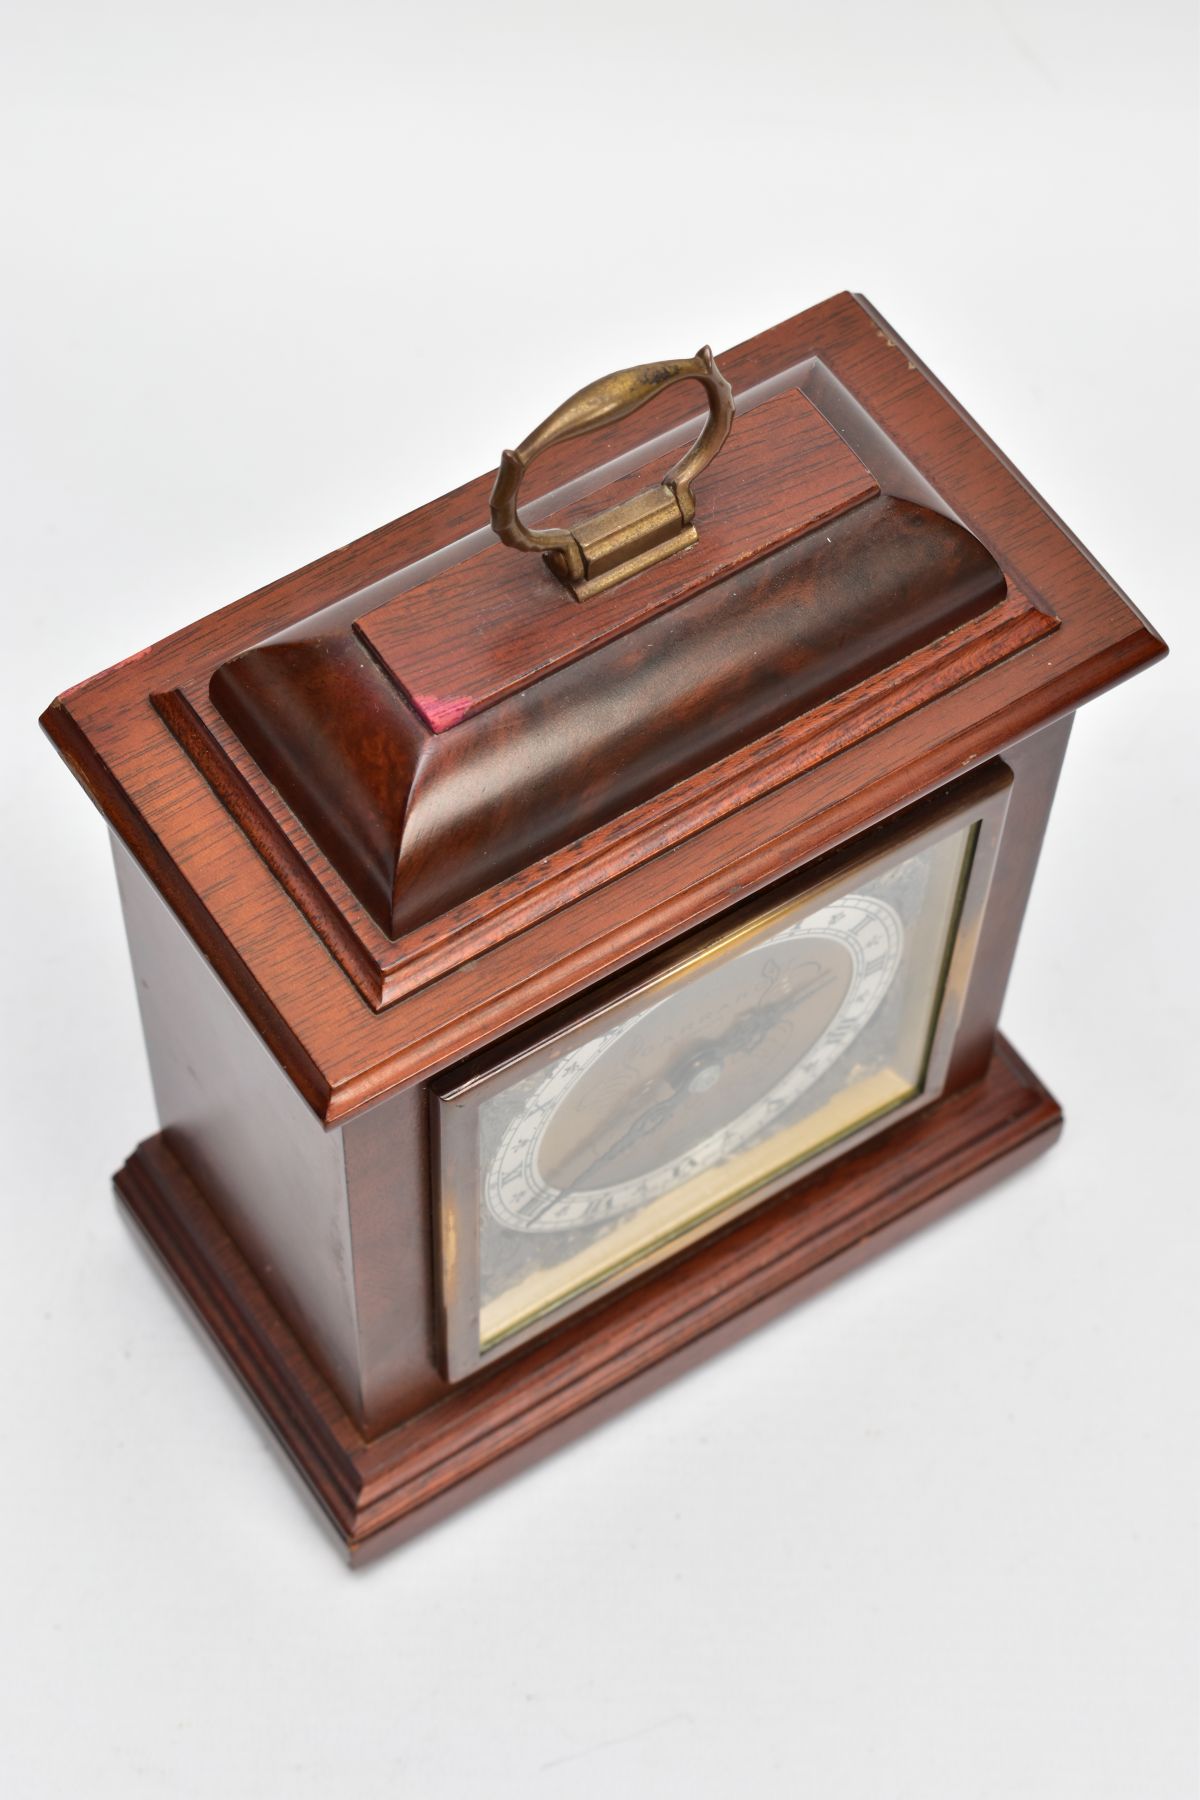 A BURR WOOD CASED GARRARD MANTLE CLOCK, London Elliott mantel clock the silvered ring set with Roman - Image 5 of 6